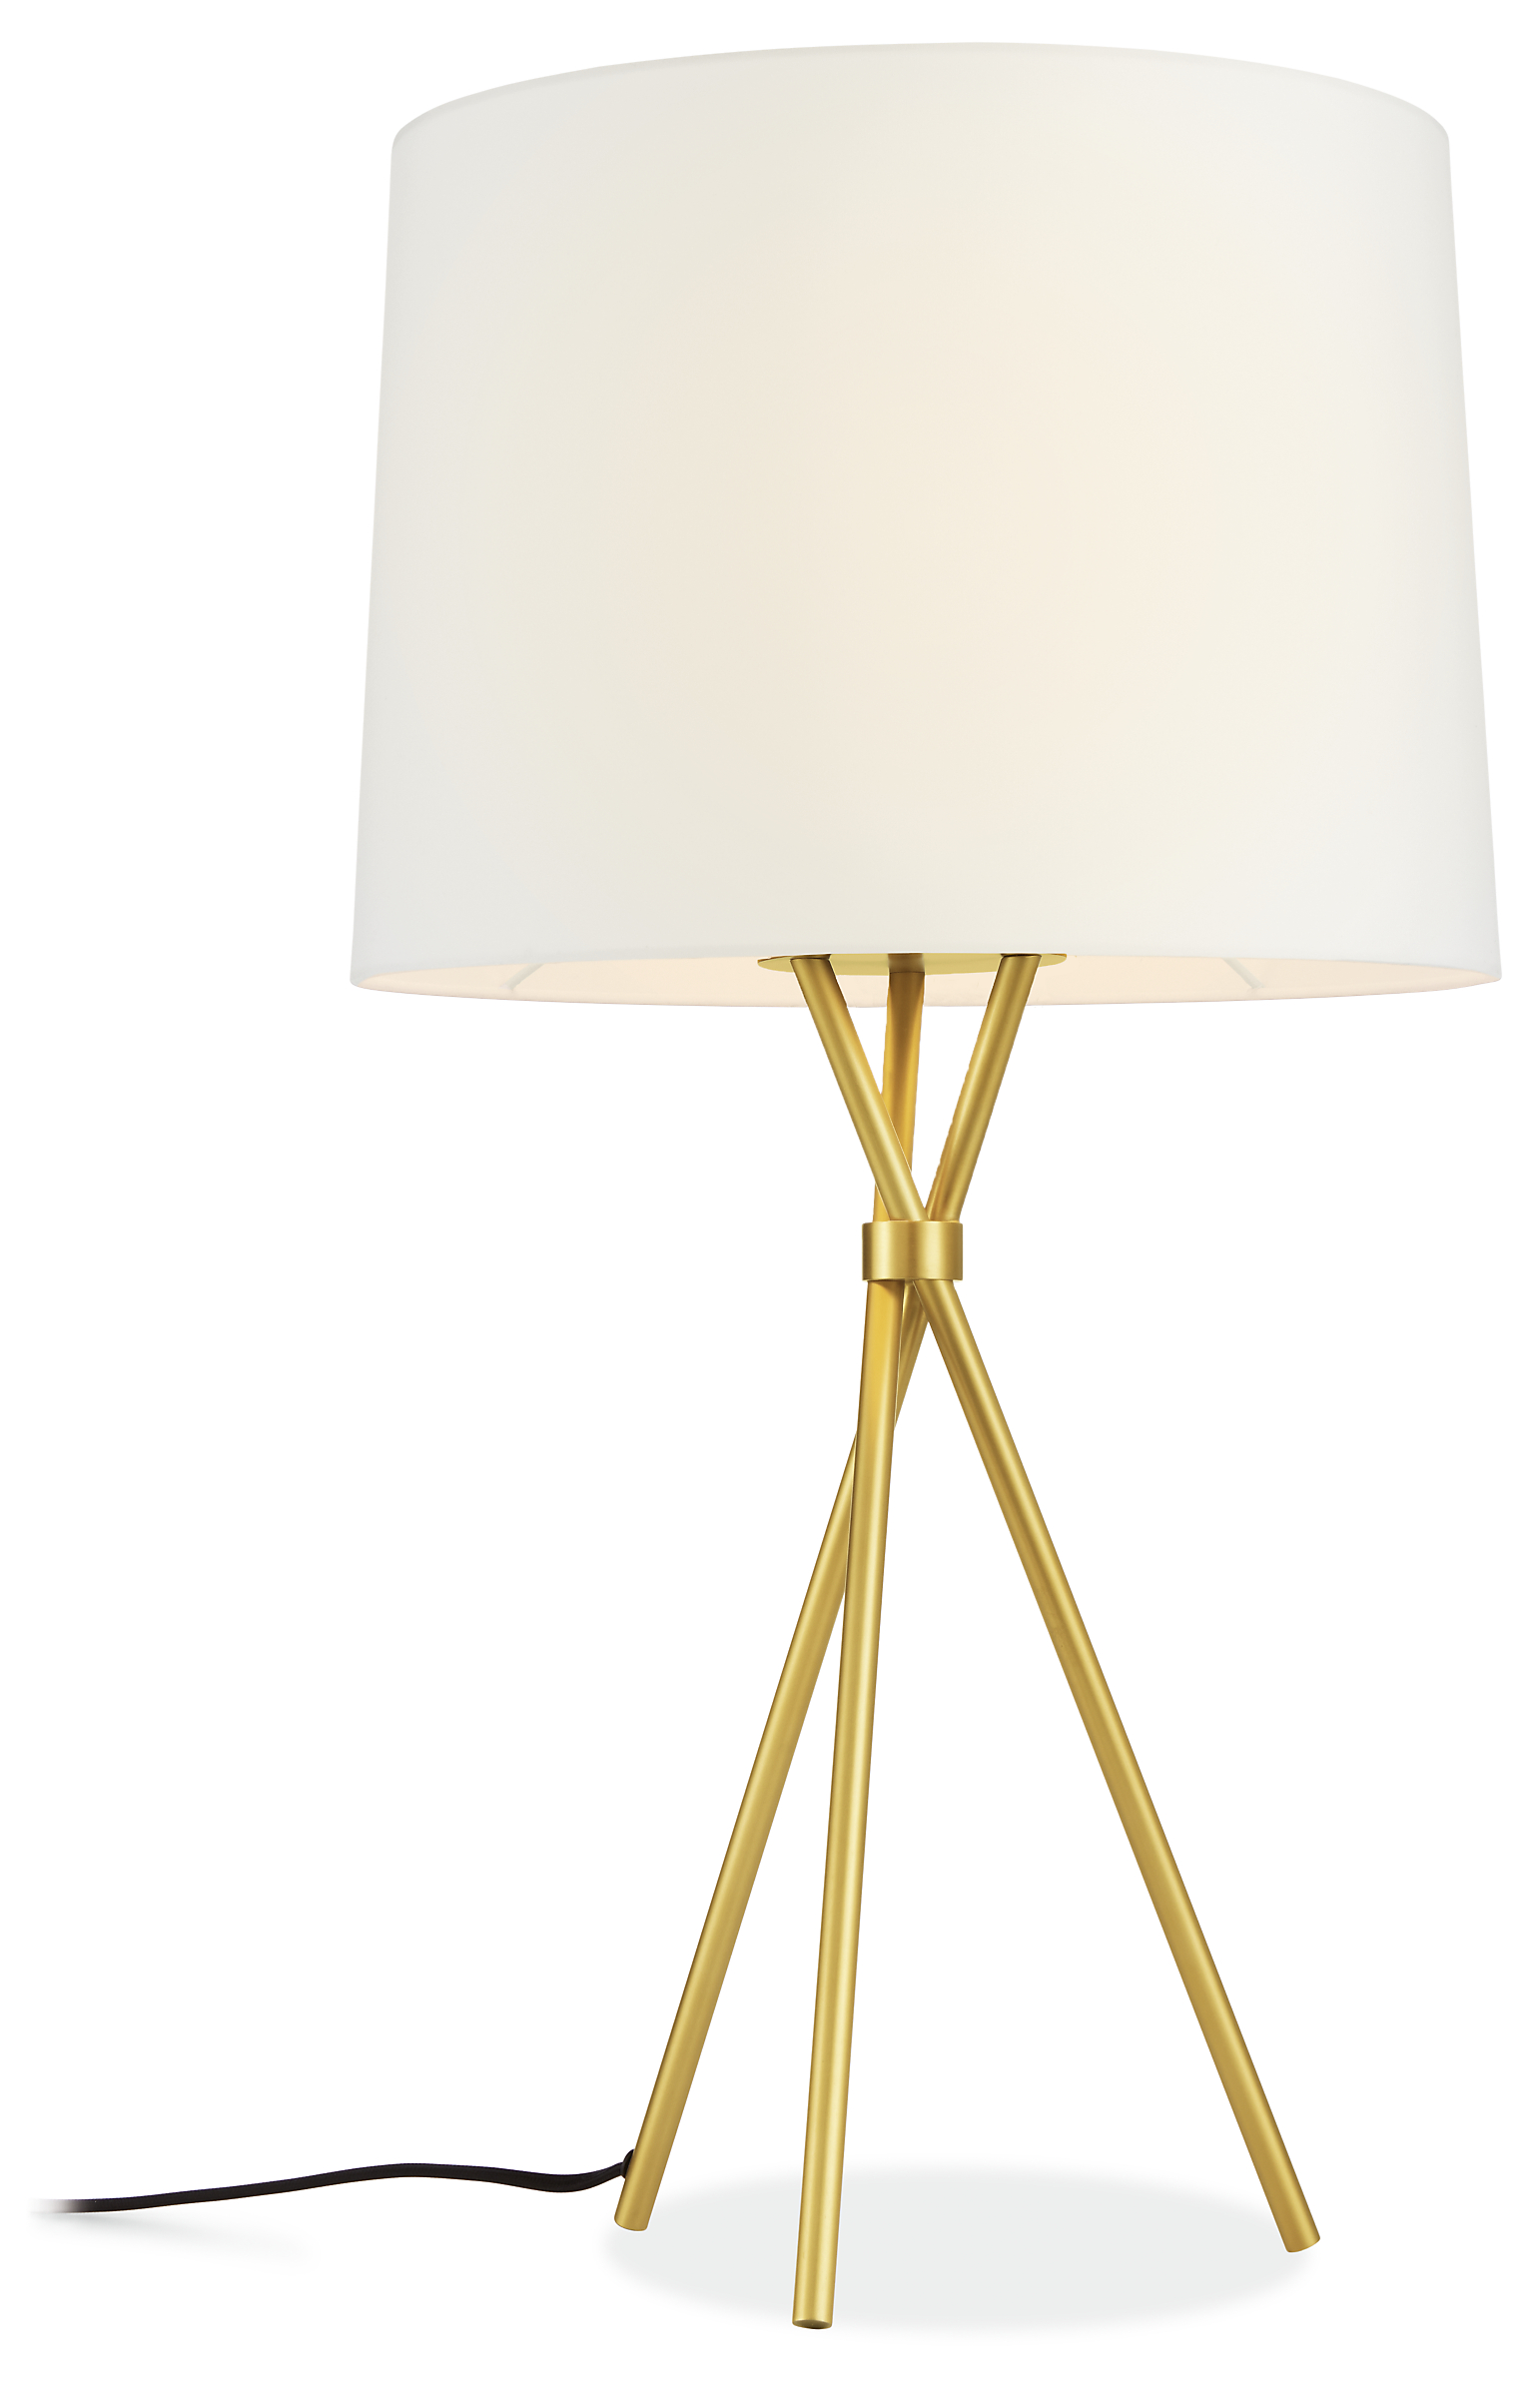 Tri-Plex Table Lamp in White with Satin Brass